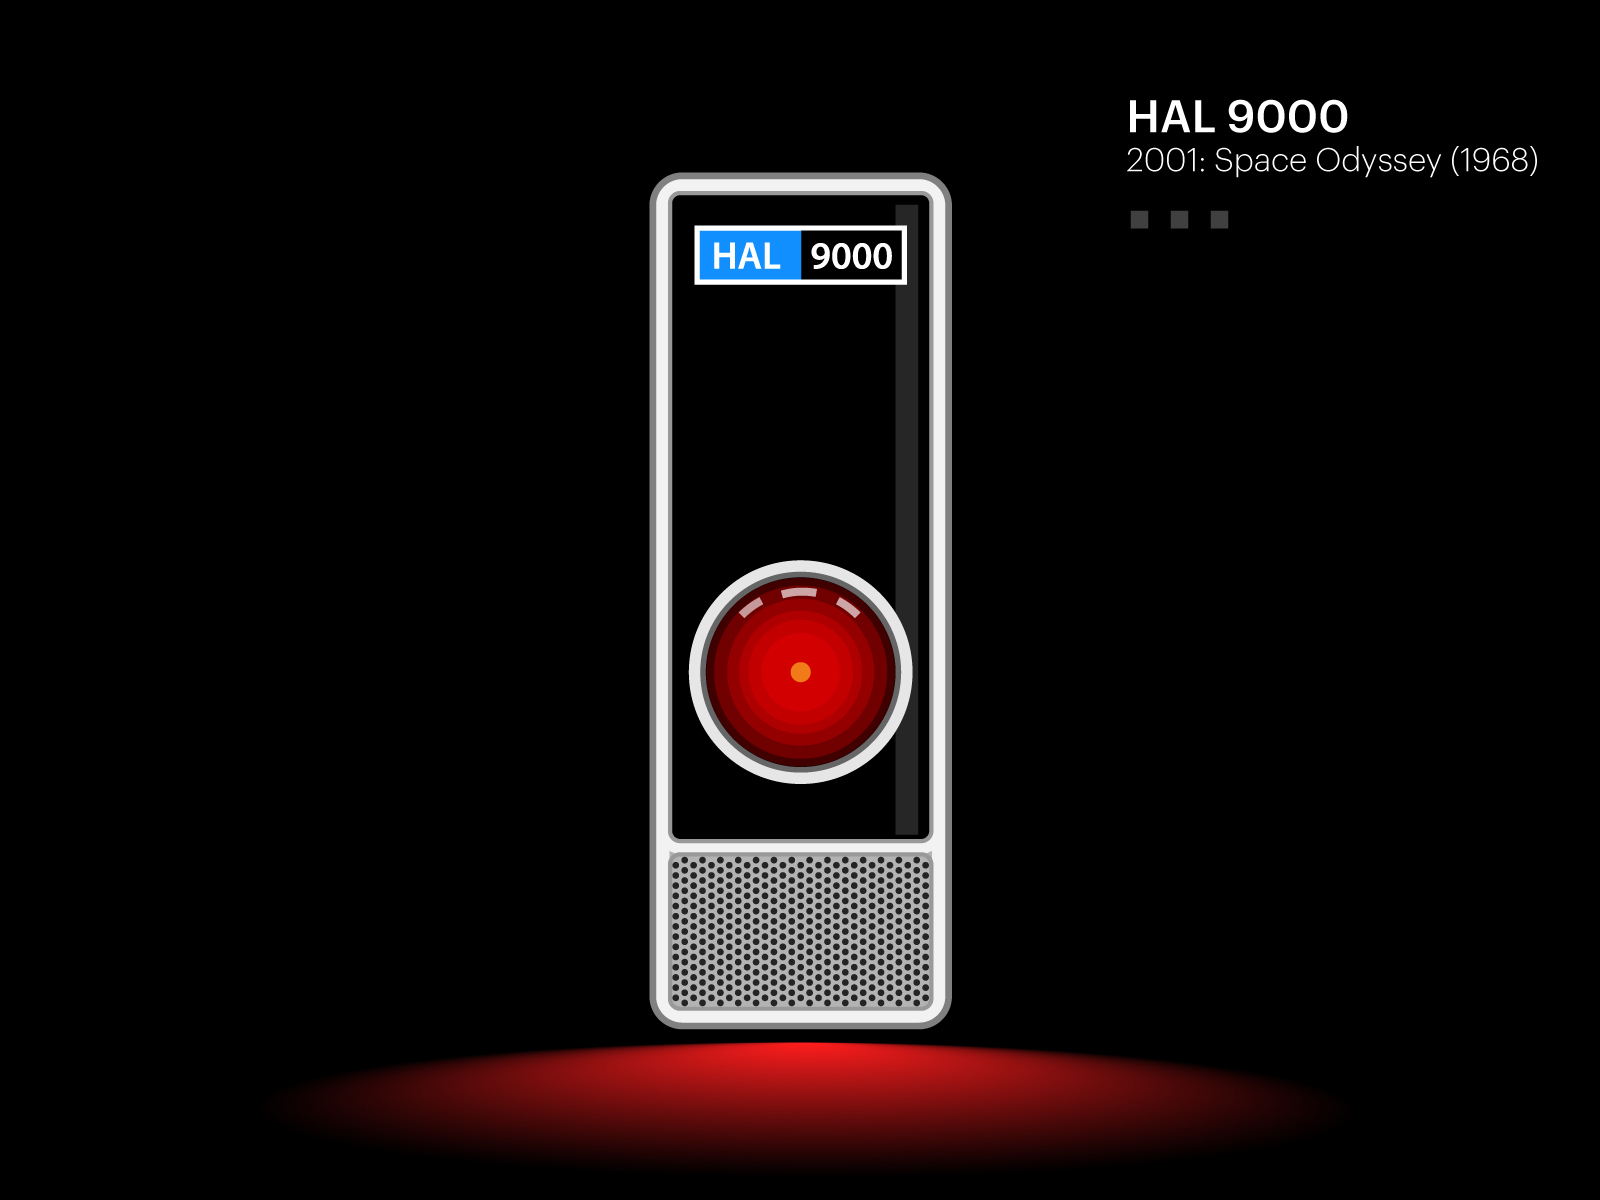 Kvæle Meningsløs bunker Hal 9000 - 2001 : A Space Odyssey by Michael V. on Dribbble